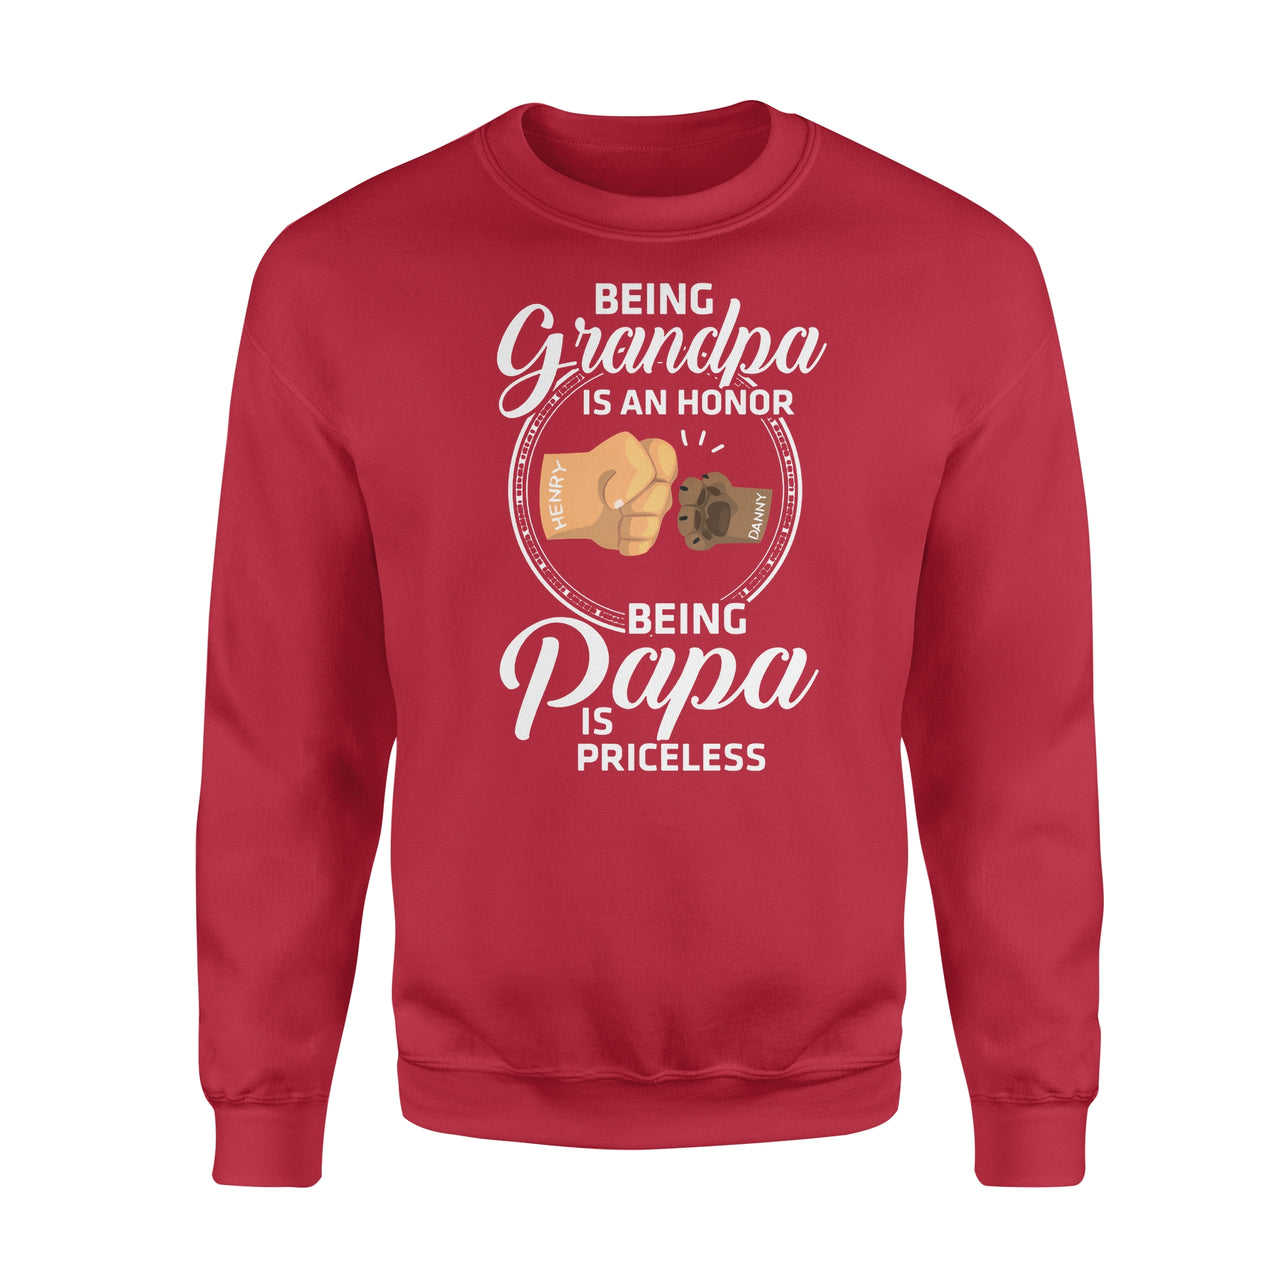 Personalized Grandpa Gift Idea - Being Grandpa Is An Honor - Standard Crew Neck Sweatshirt